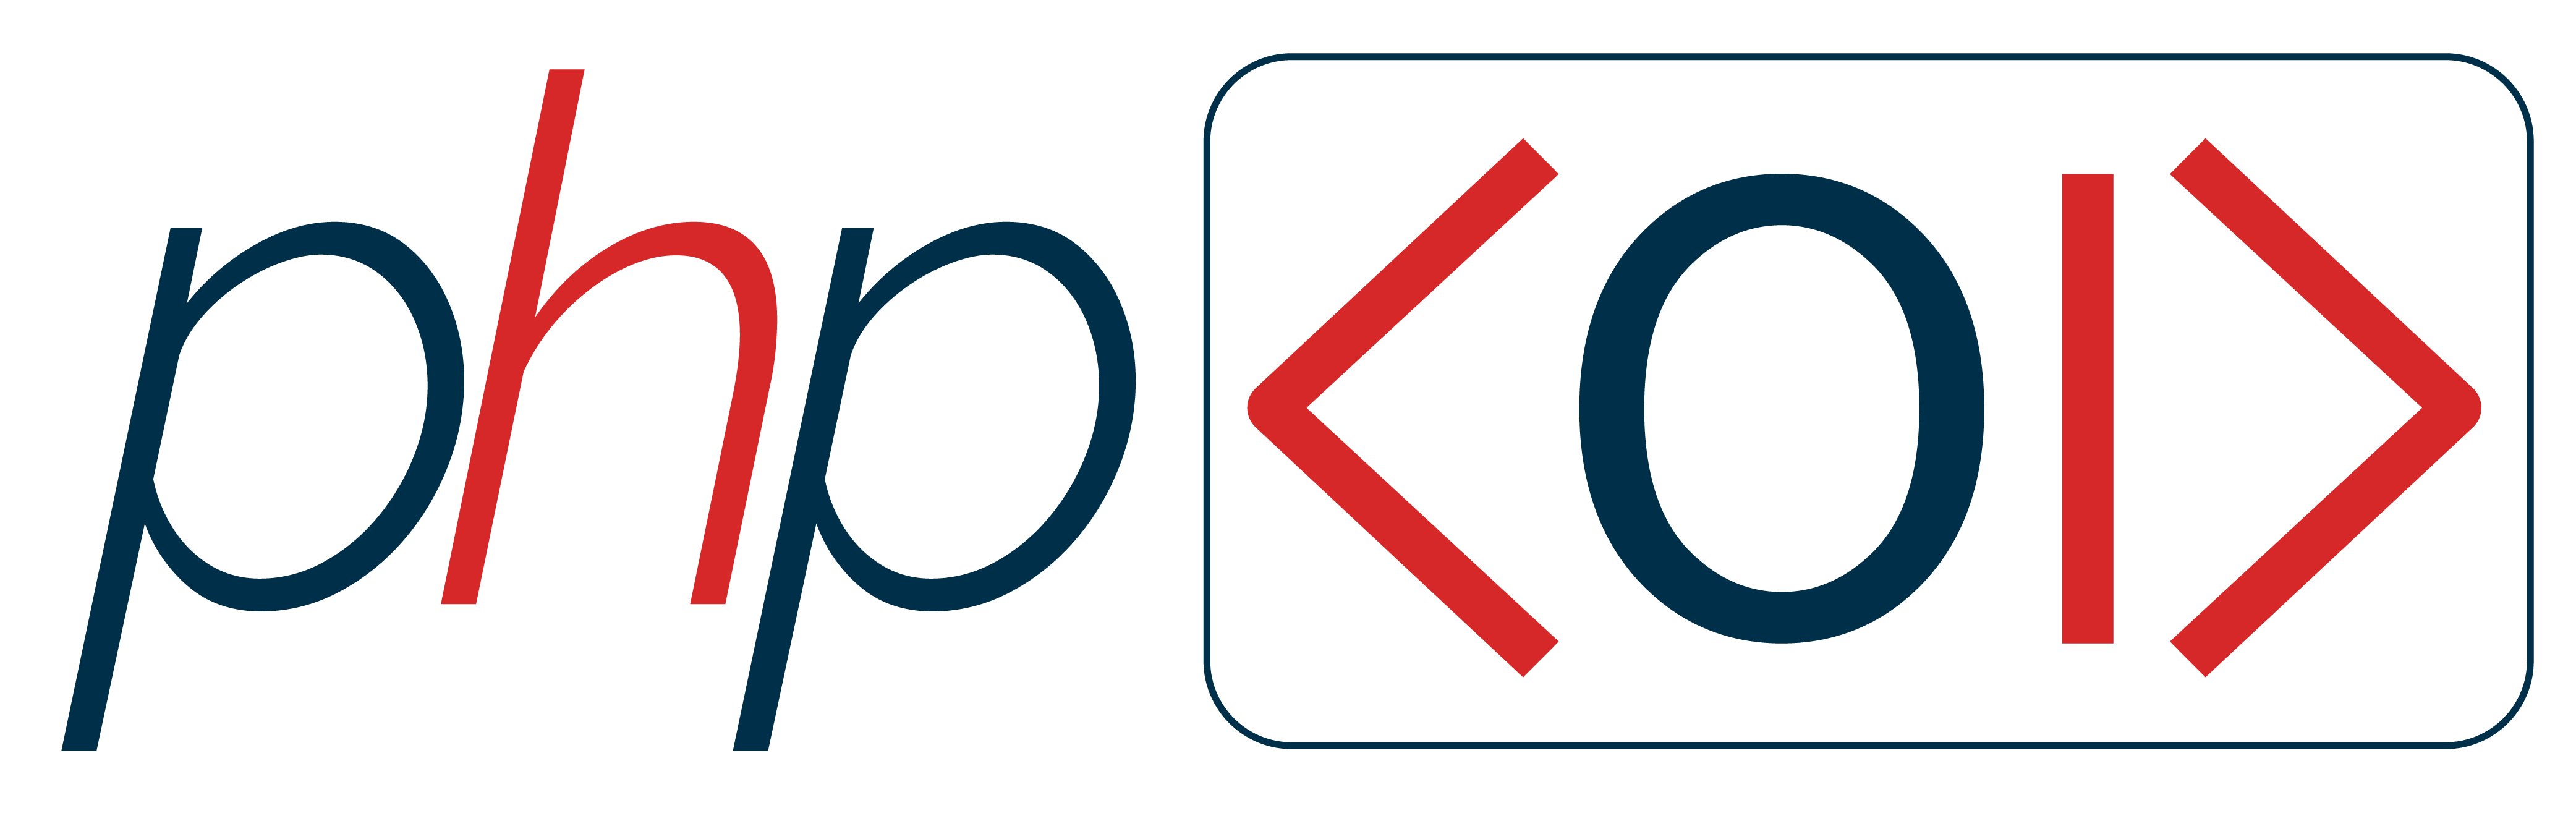 PHP Cod Logo